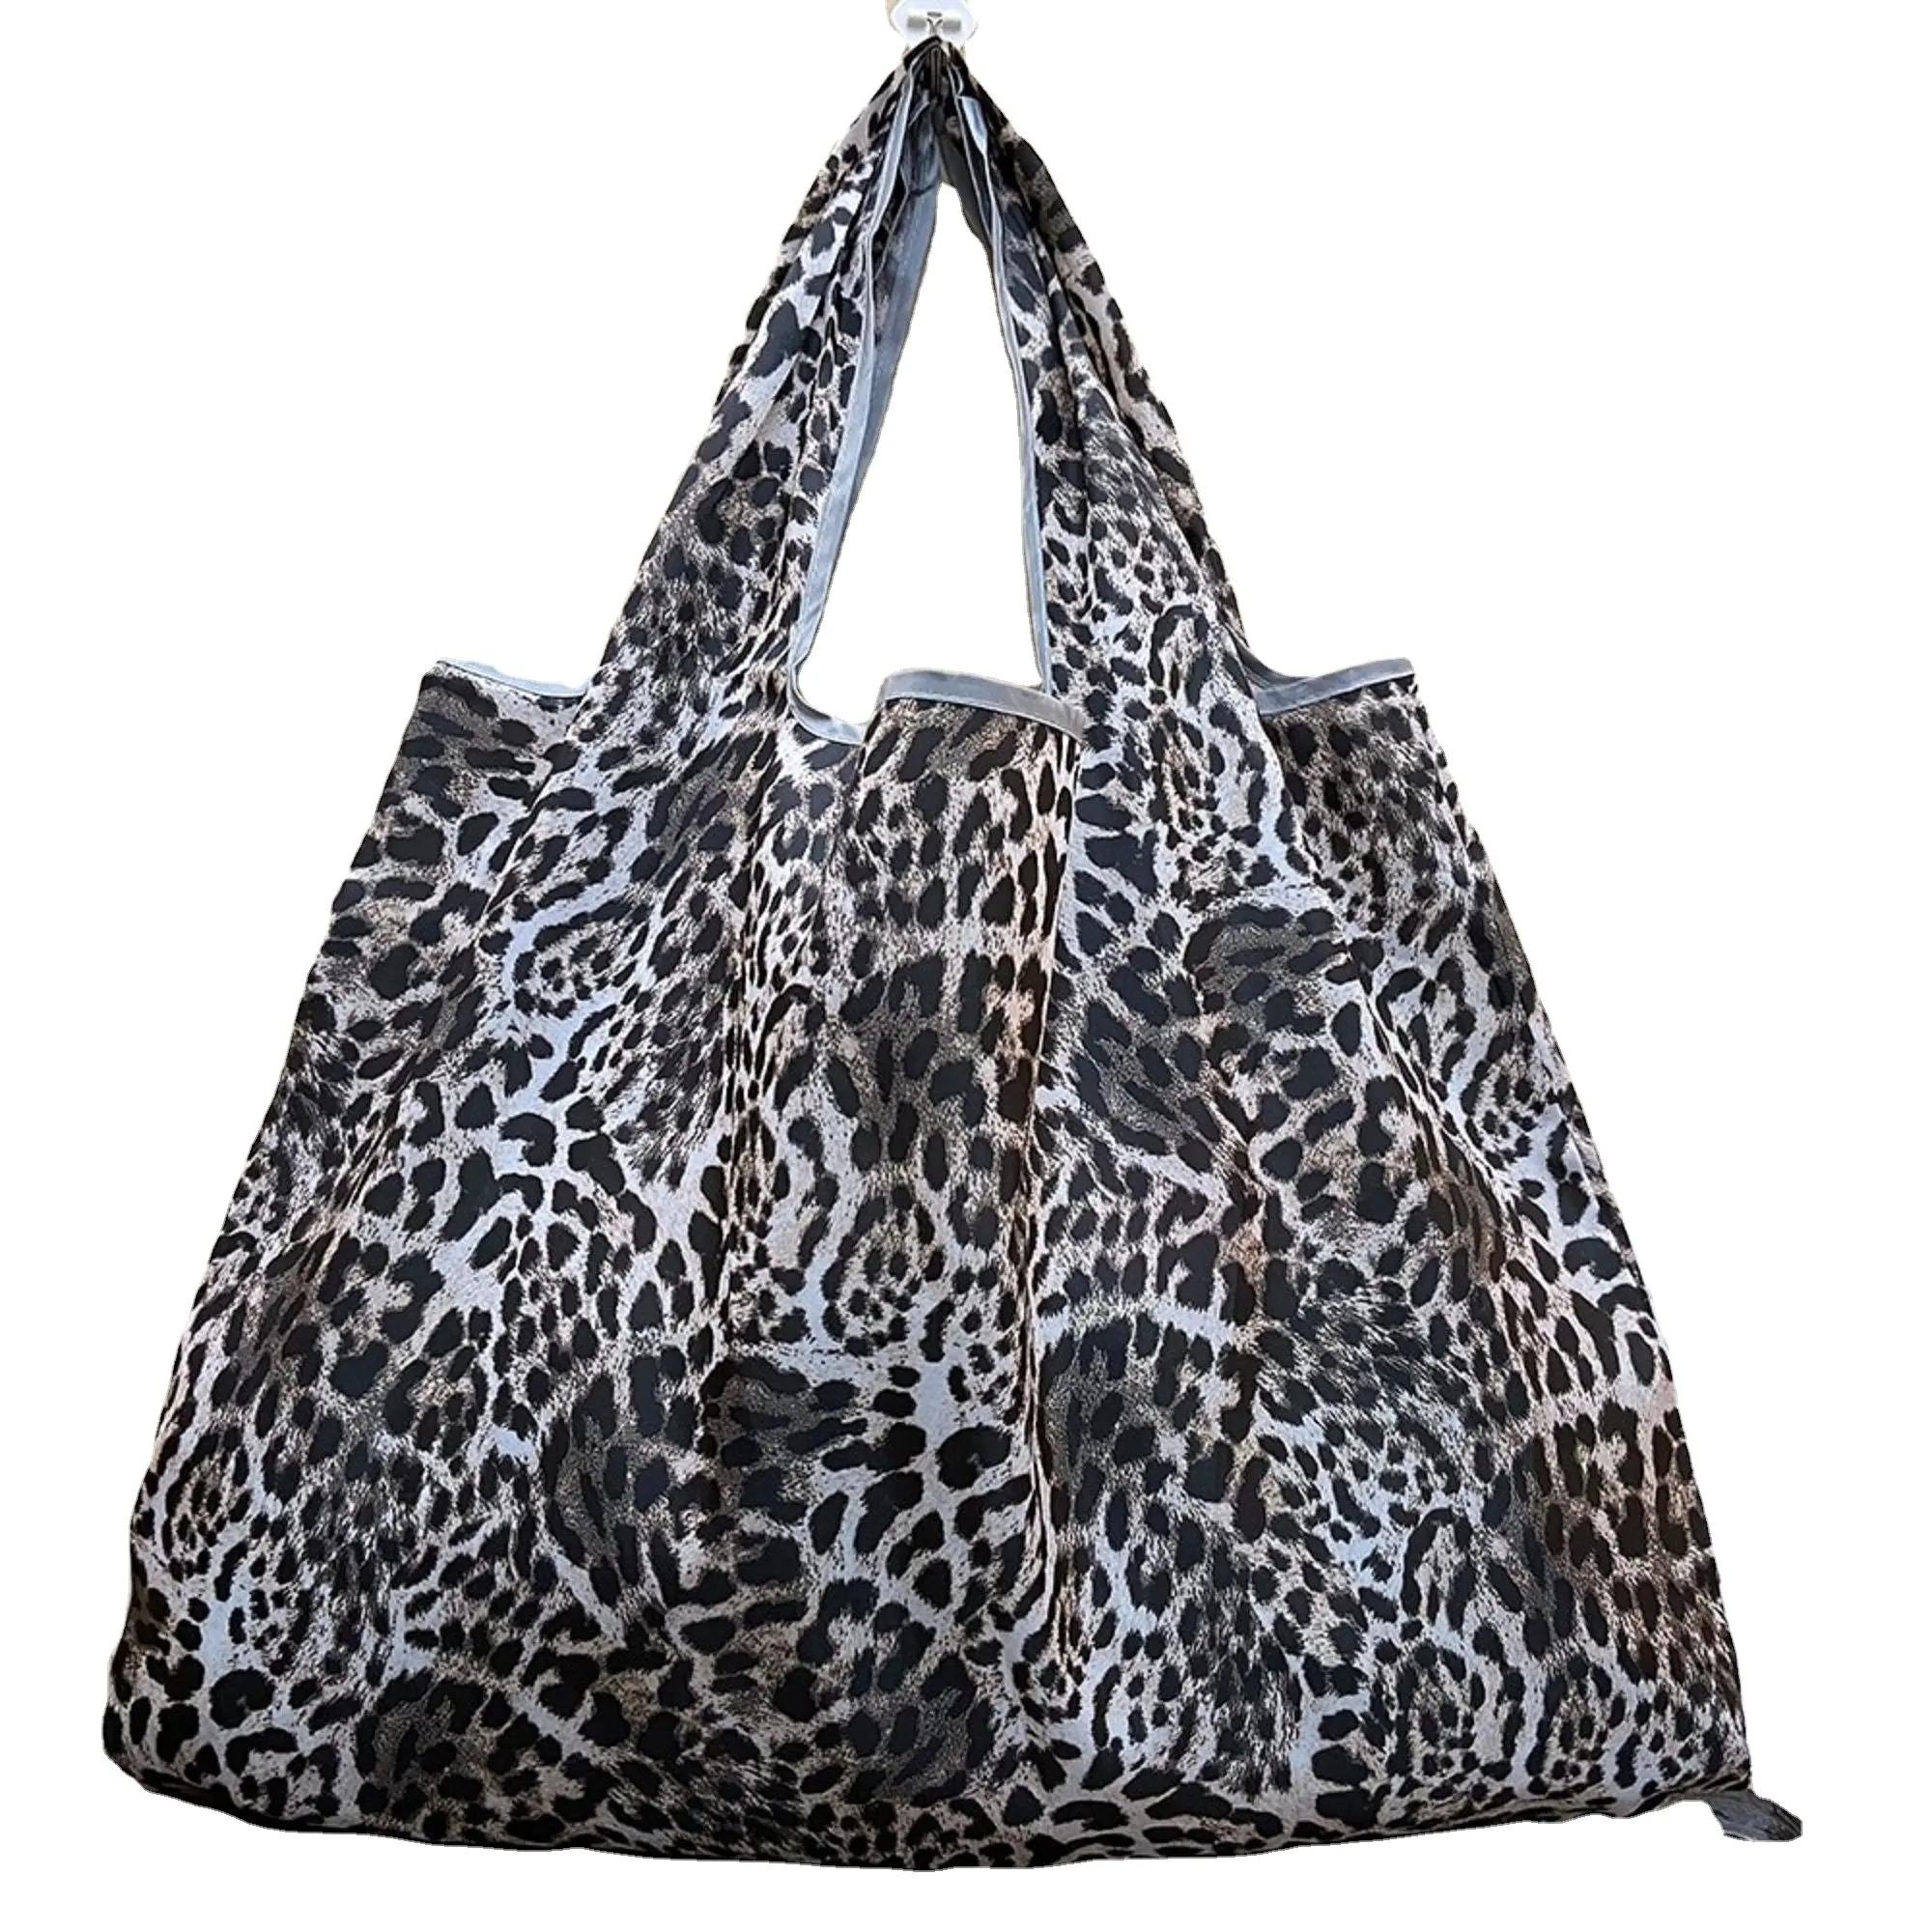 सुविधाजनक फोल्डेबल पॉलिएस्टर शॉपिंग बैग ड्रॉस्ट्रिंग बैग, पुनर्नवीनीकरण नई गोल गुणवत्ता कस्टम फोल्डेबल पुनः प्रयोज्य खरीदारी बैग/